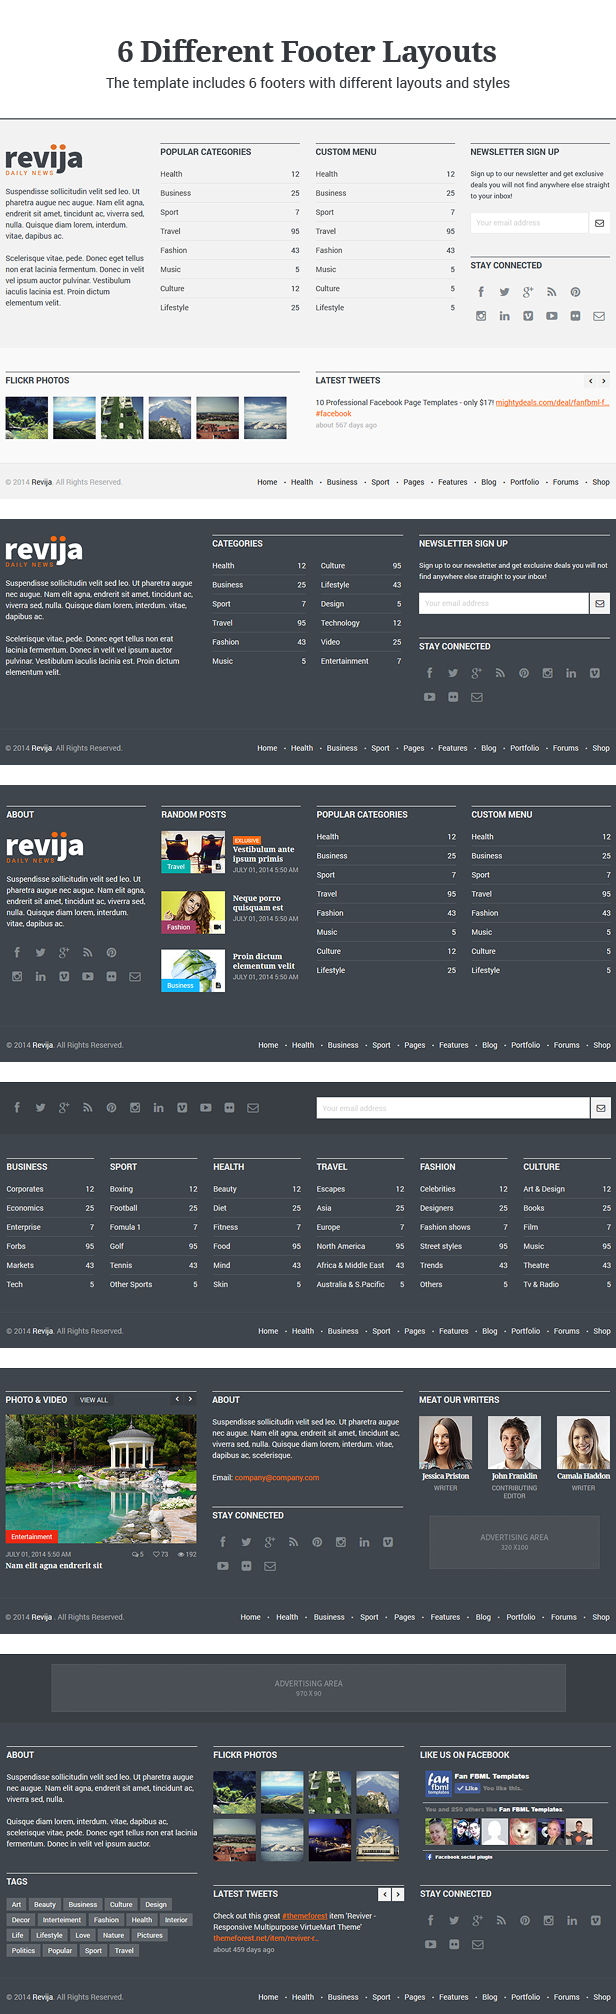 Revija - Premium Blog/Magazine HTML Template - 7